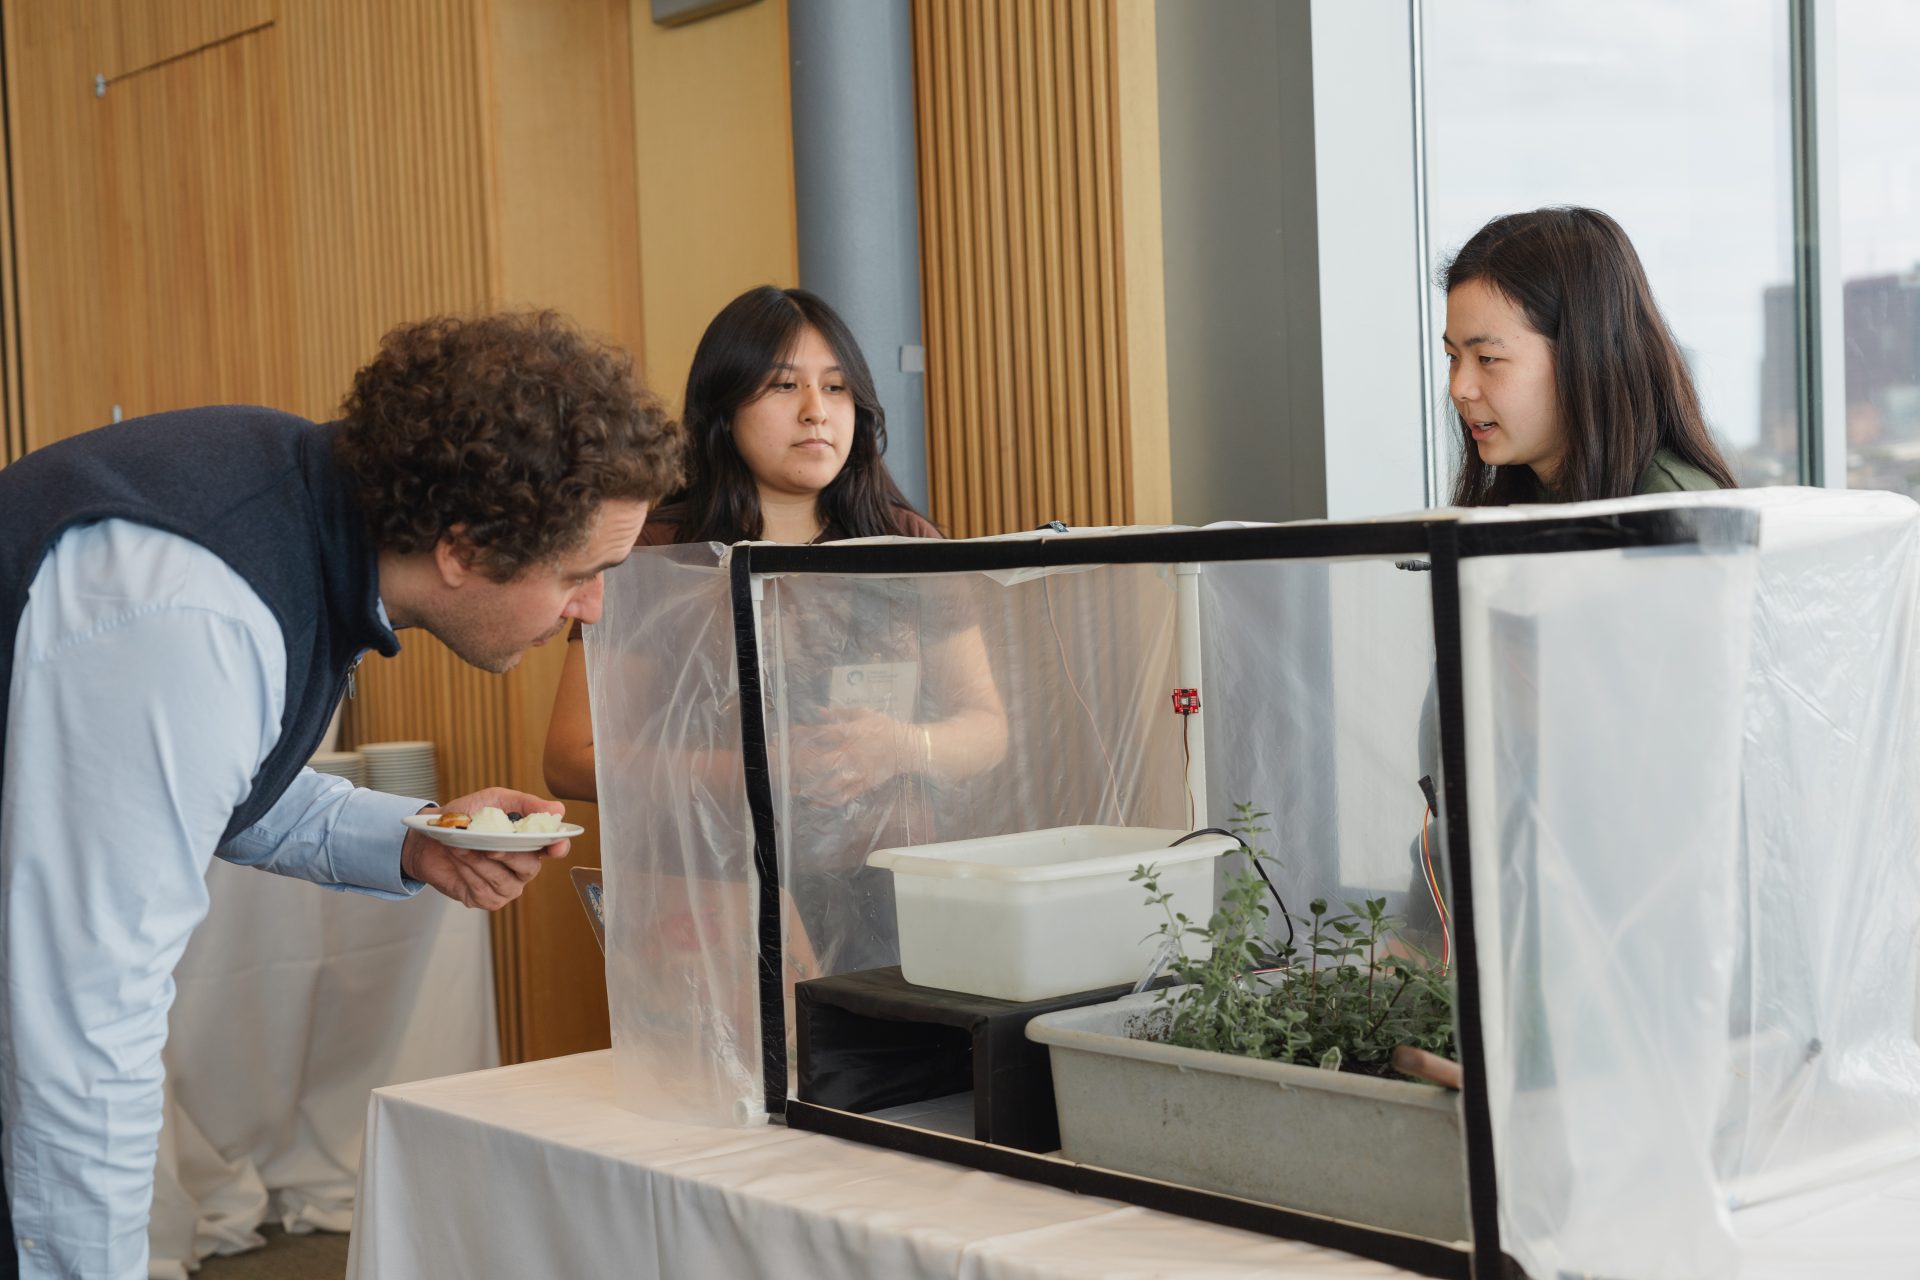 Undergraduates design “smart” sensing systems in new lab class